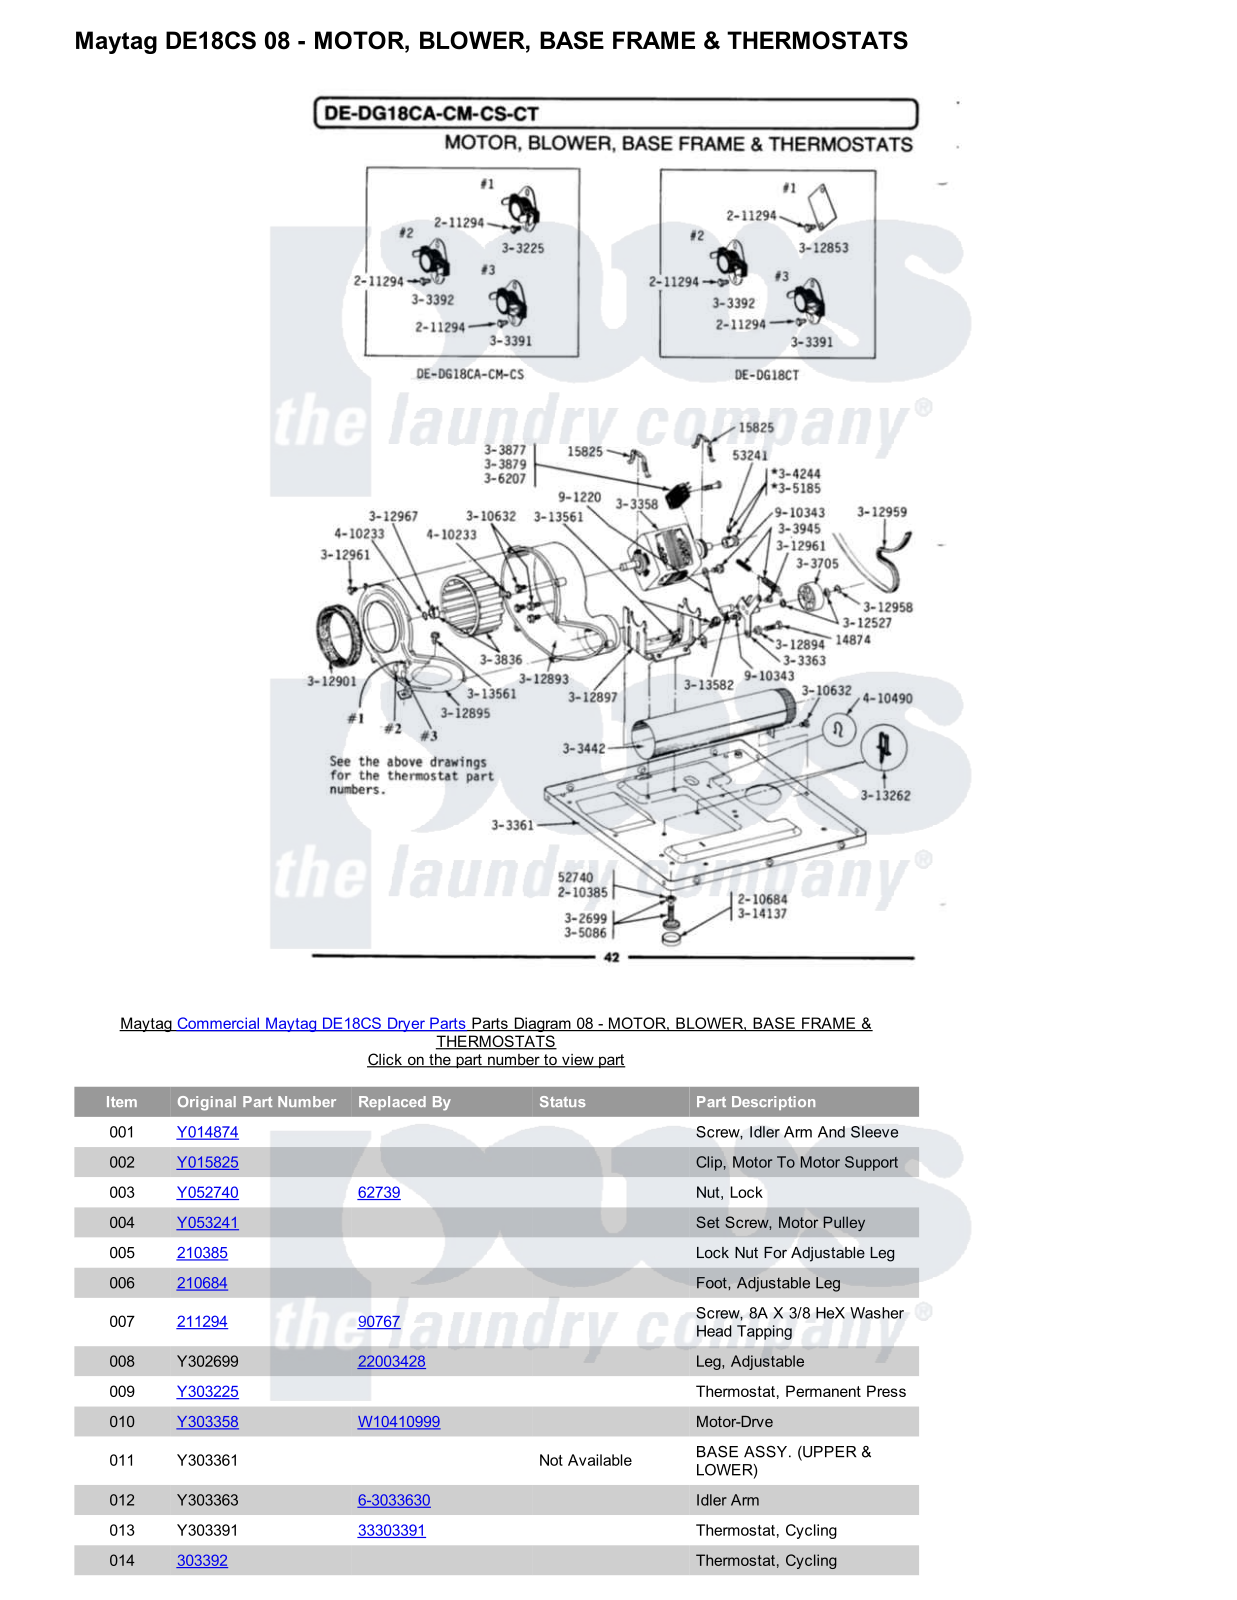 Maytag DE18CS Parts Diagram